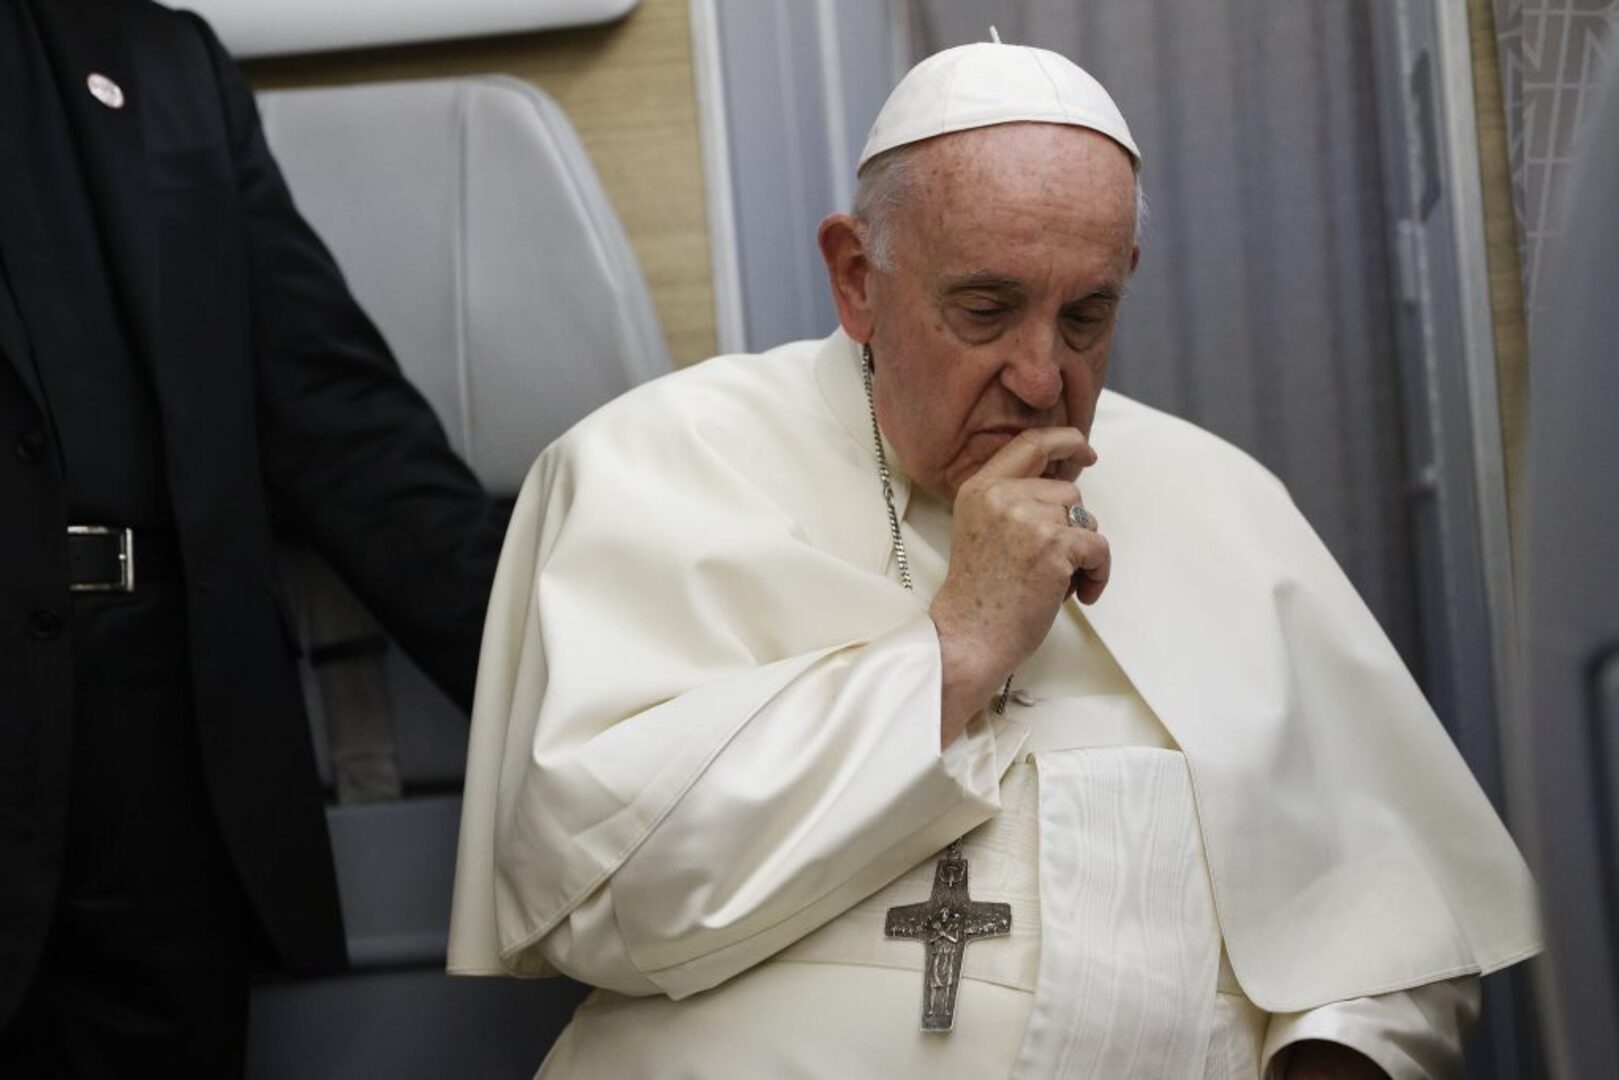 Pope Francis apologizes after homophobic slur